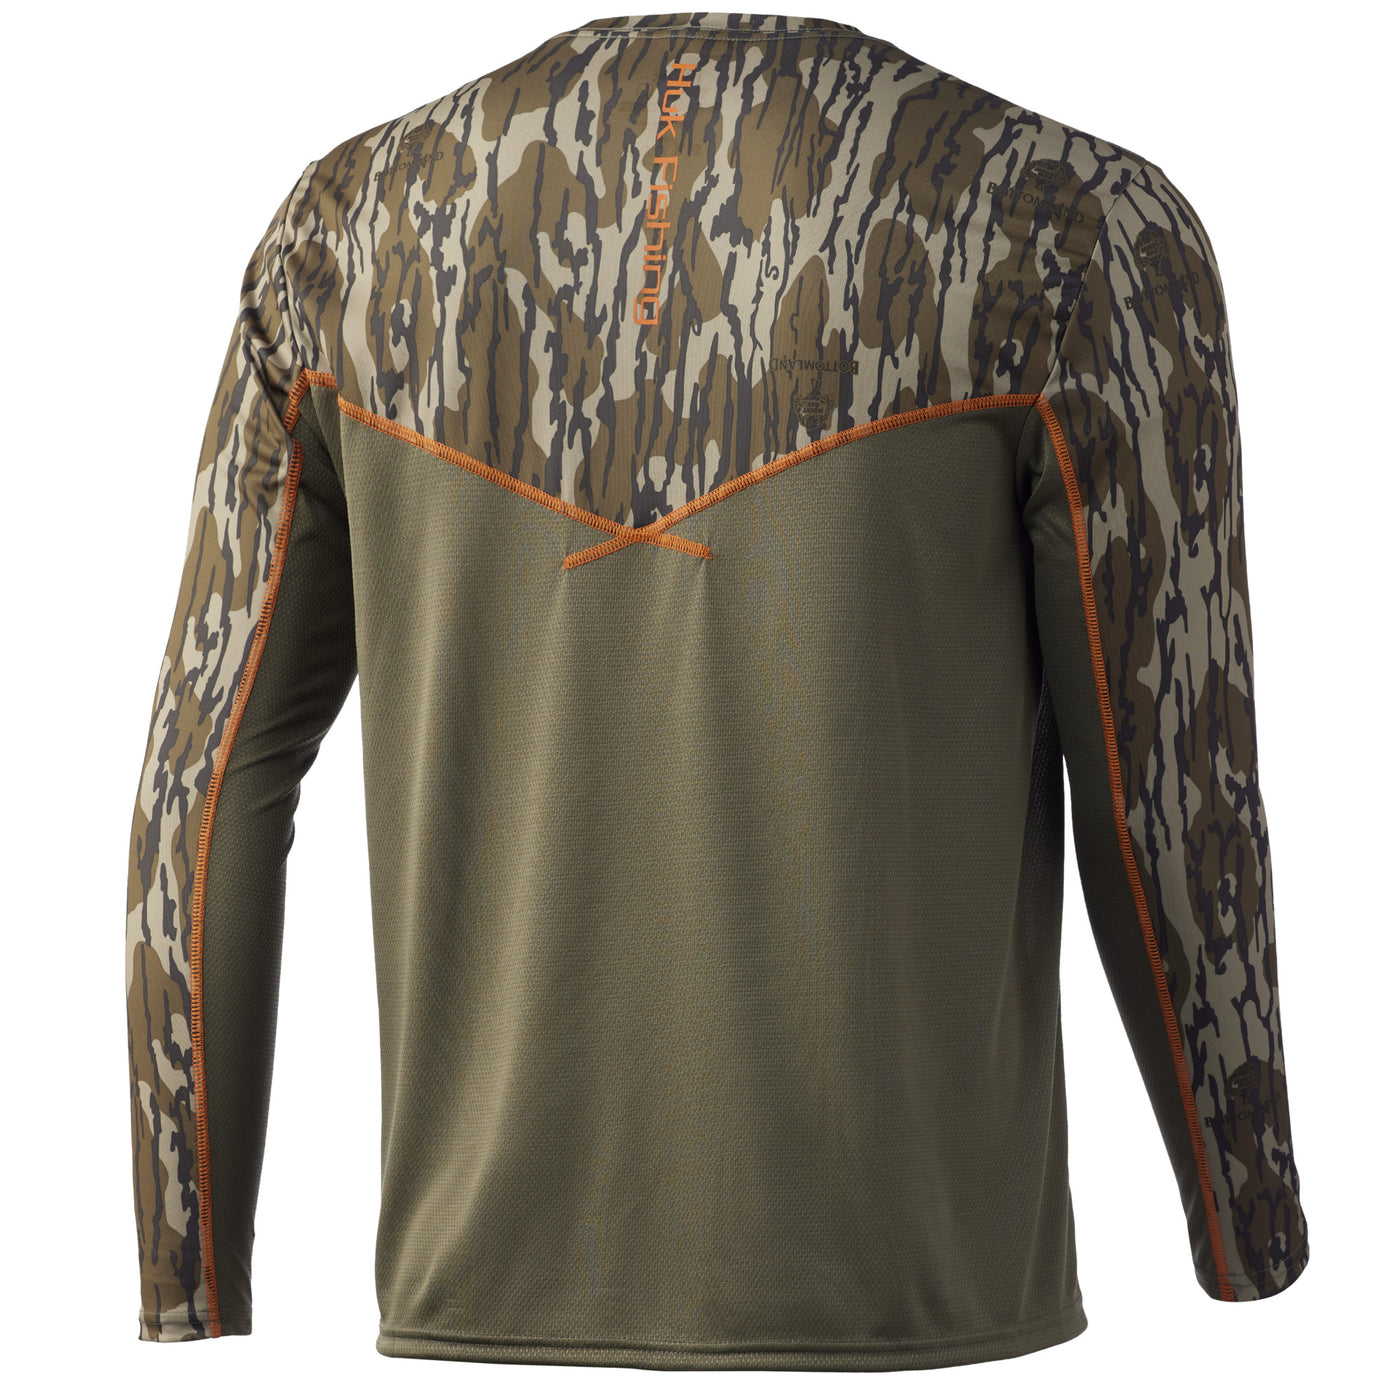 Huk Icon X Long-Sleeve Fishing Shirt for Men